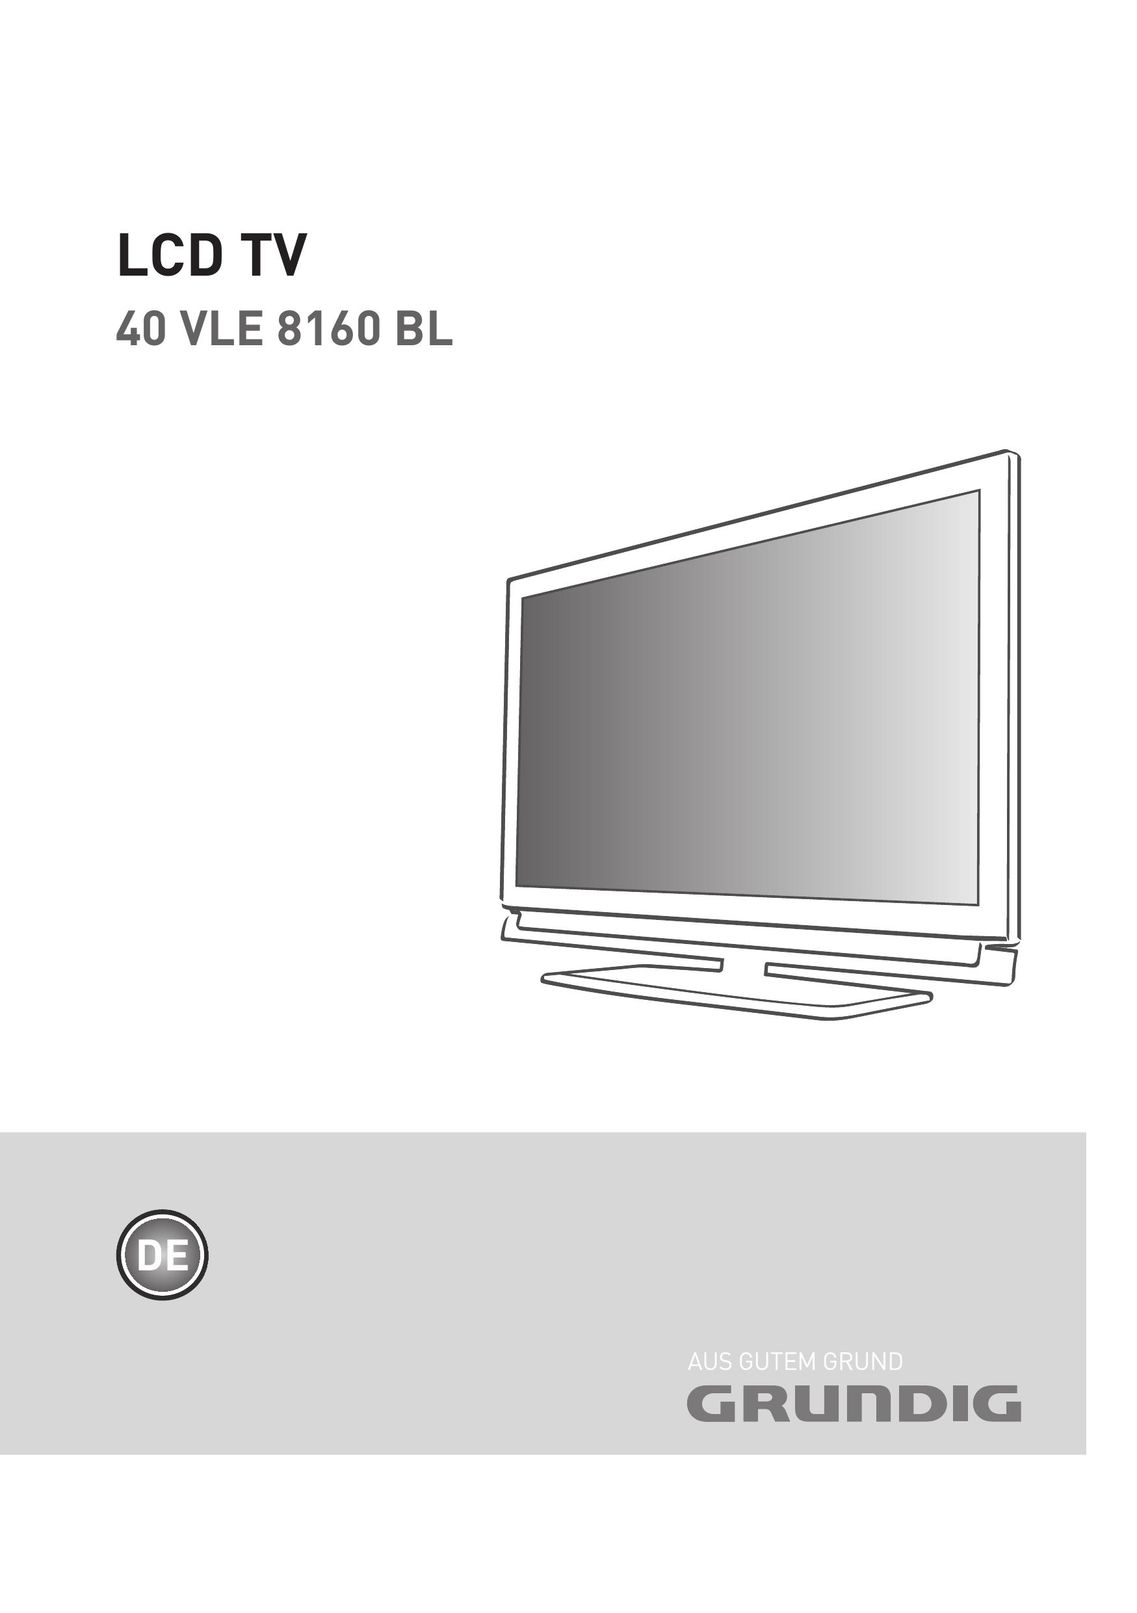 Grundig 40 VLE 8160 BL Flat Panel Television User Manual